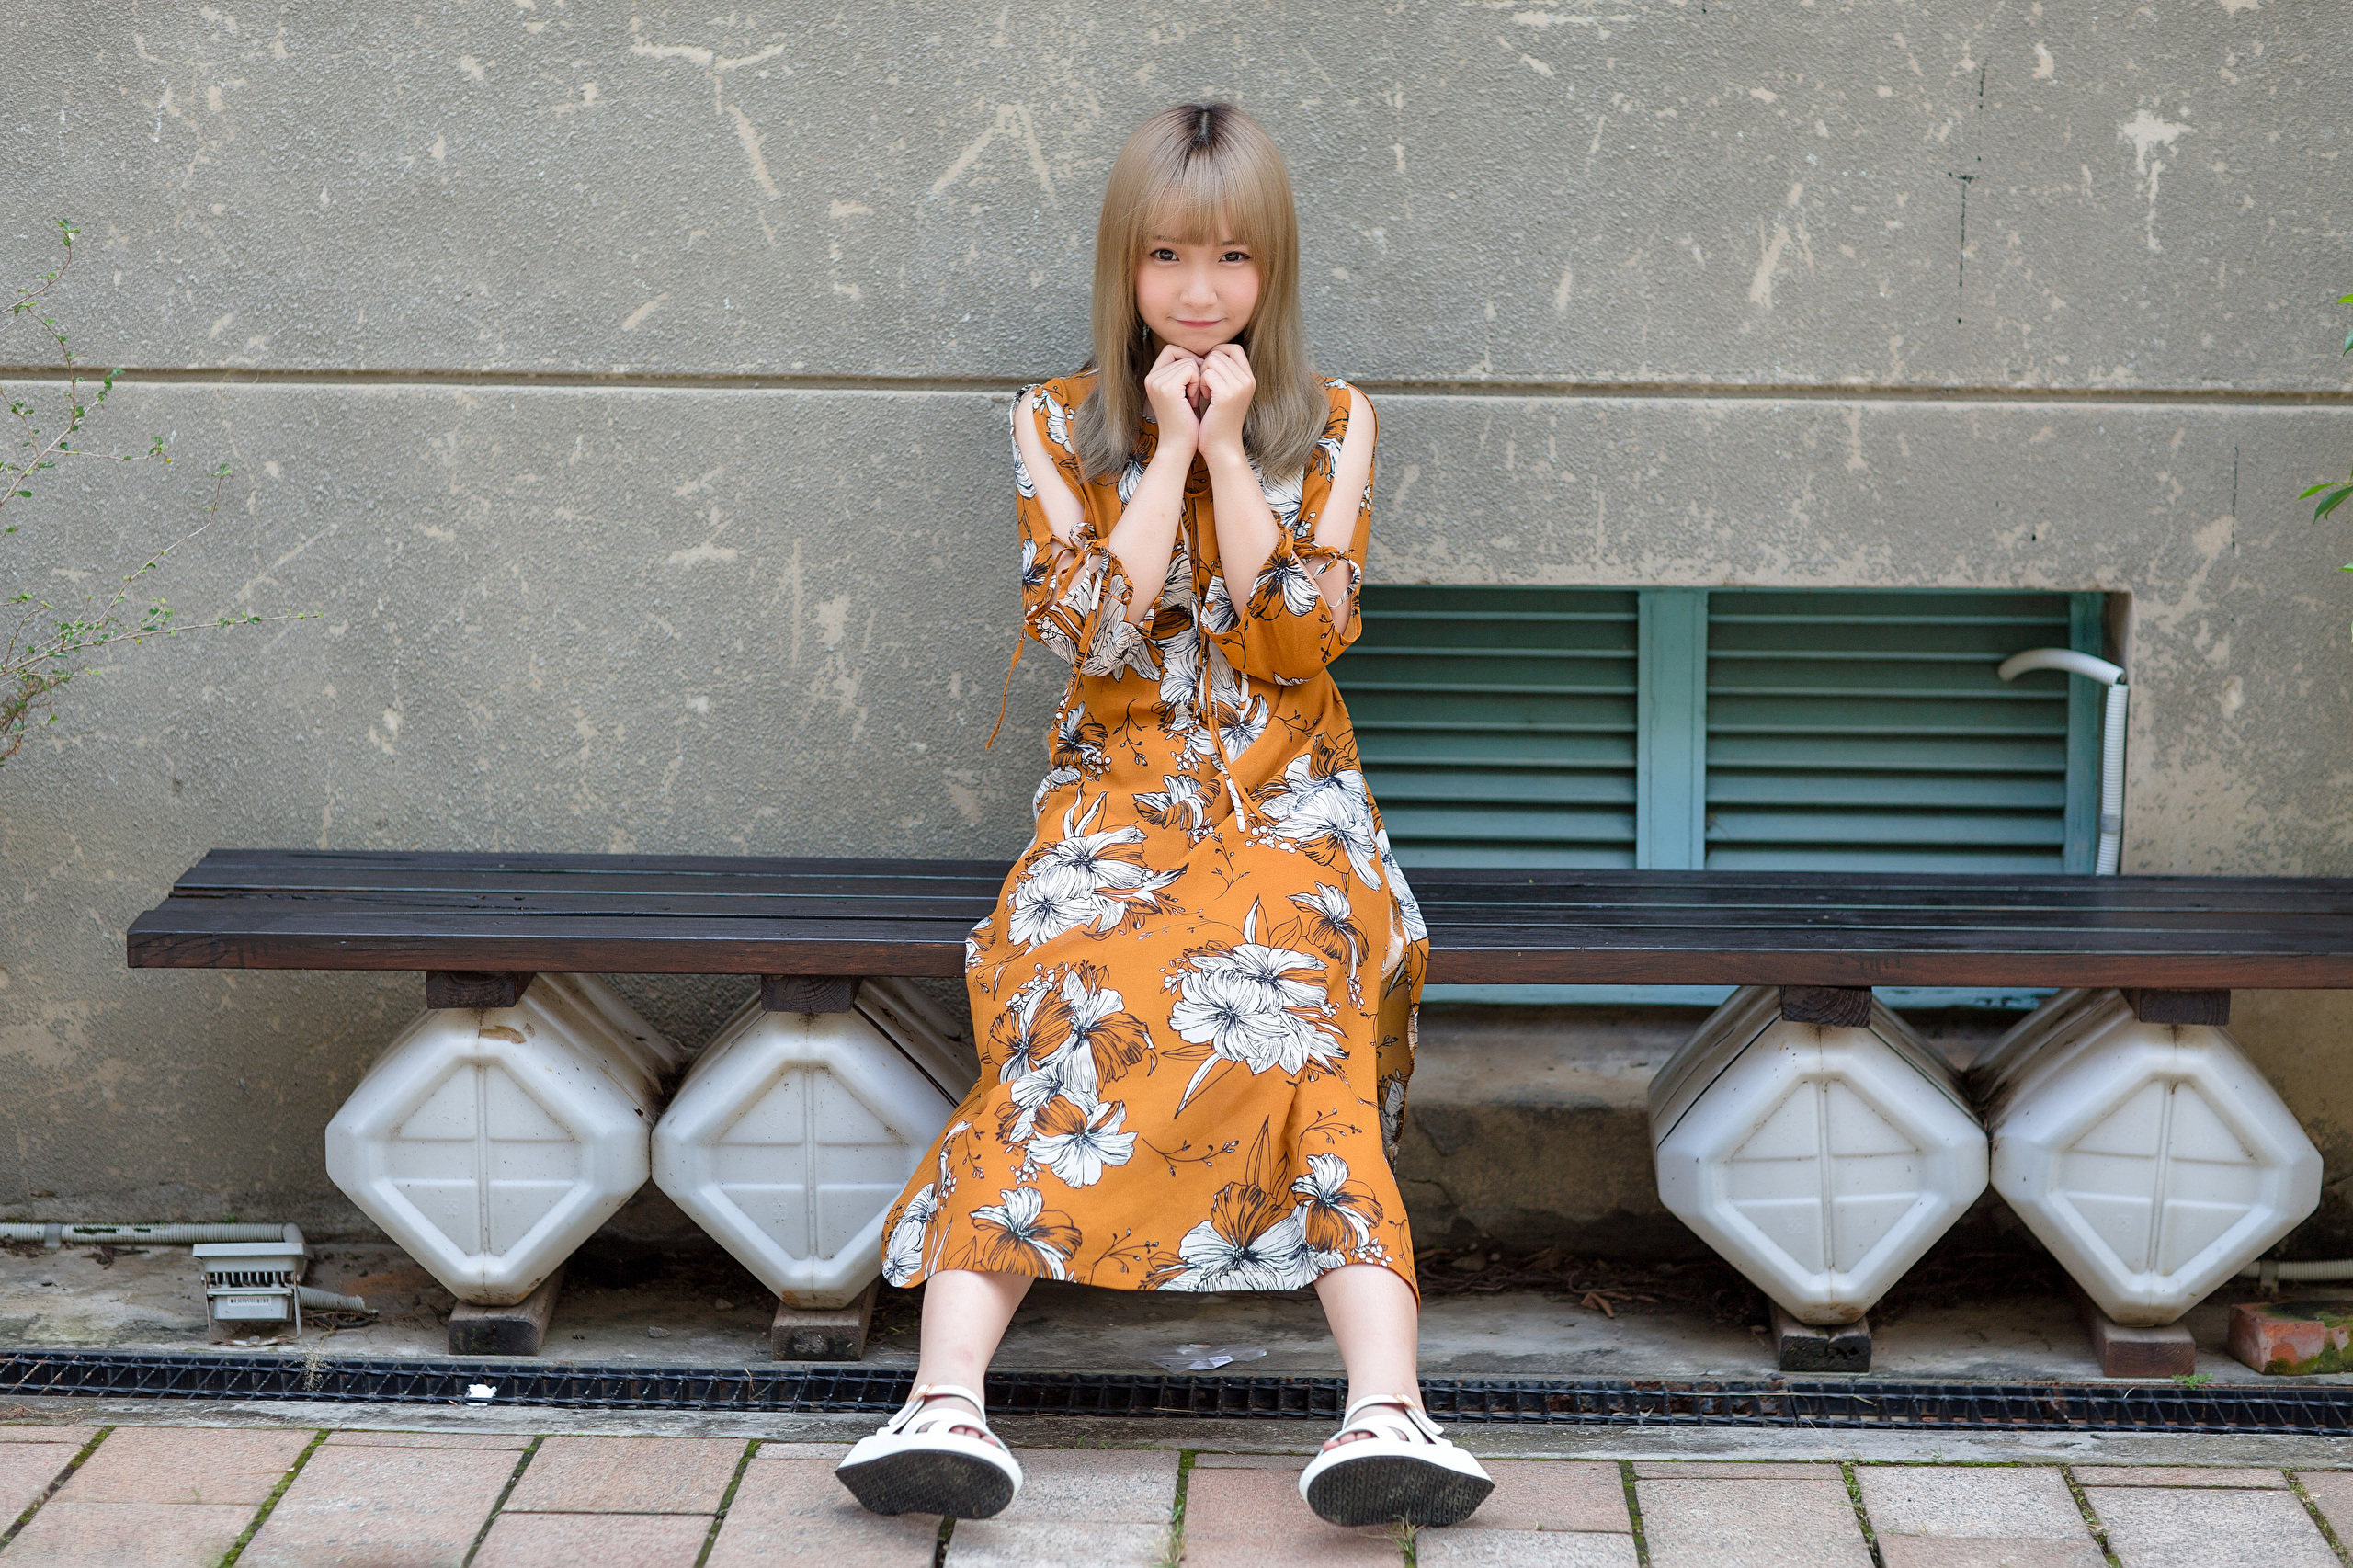 People 2560x1706 Asian model women long hair brunette flower dress sitting bench barefoot sandal wall drains